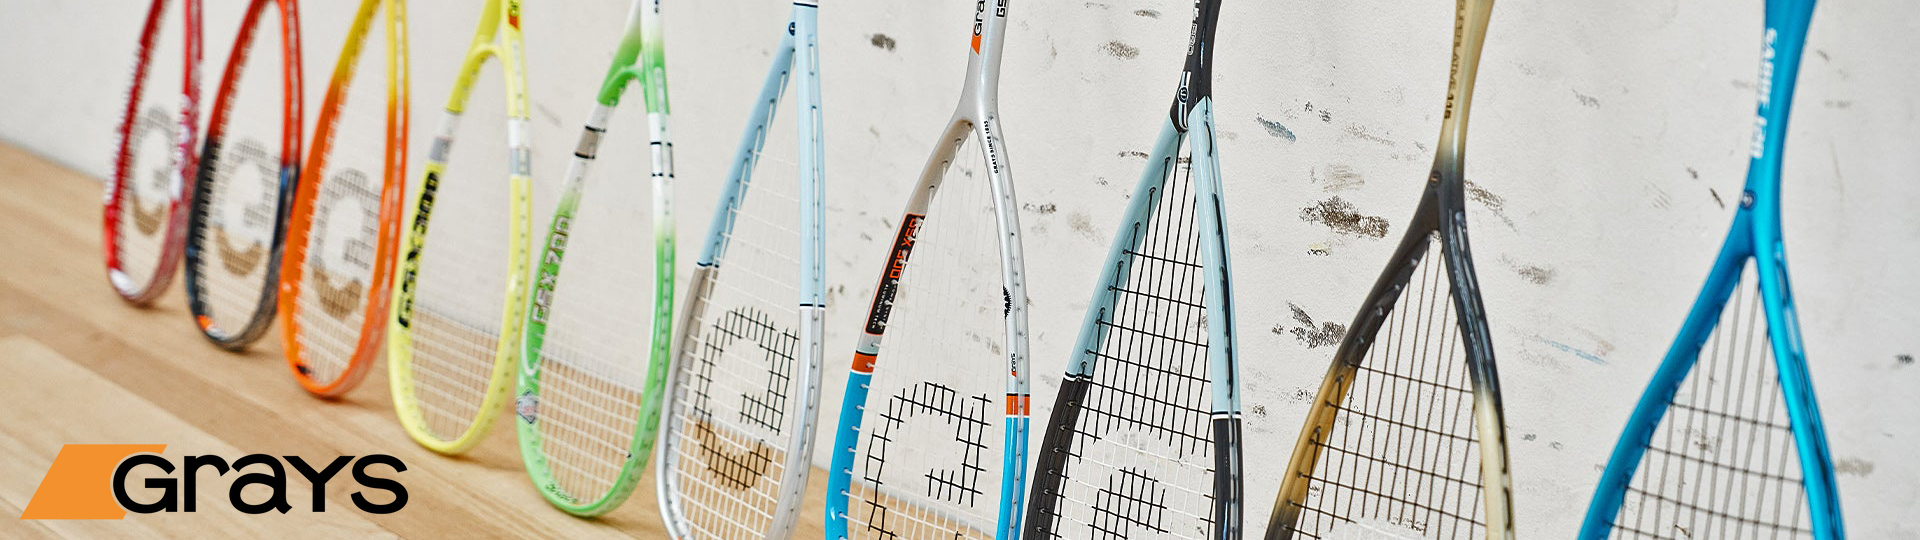 grays-squash-racquet-australia-banner-2022.jpg